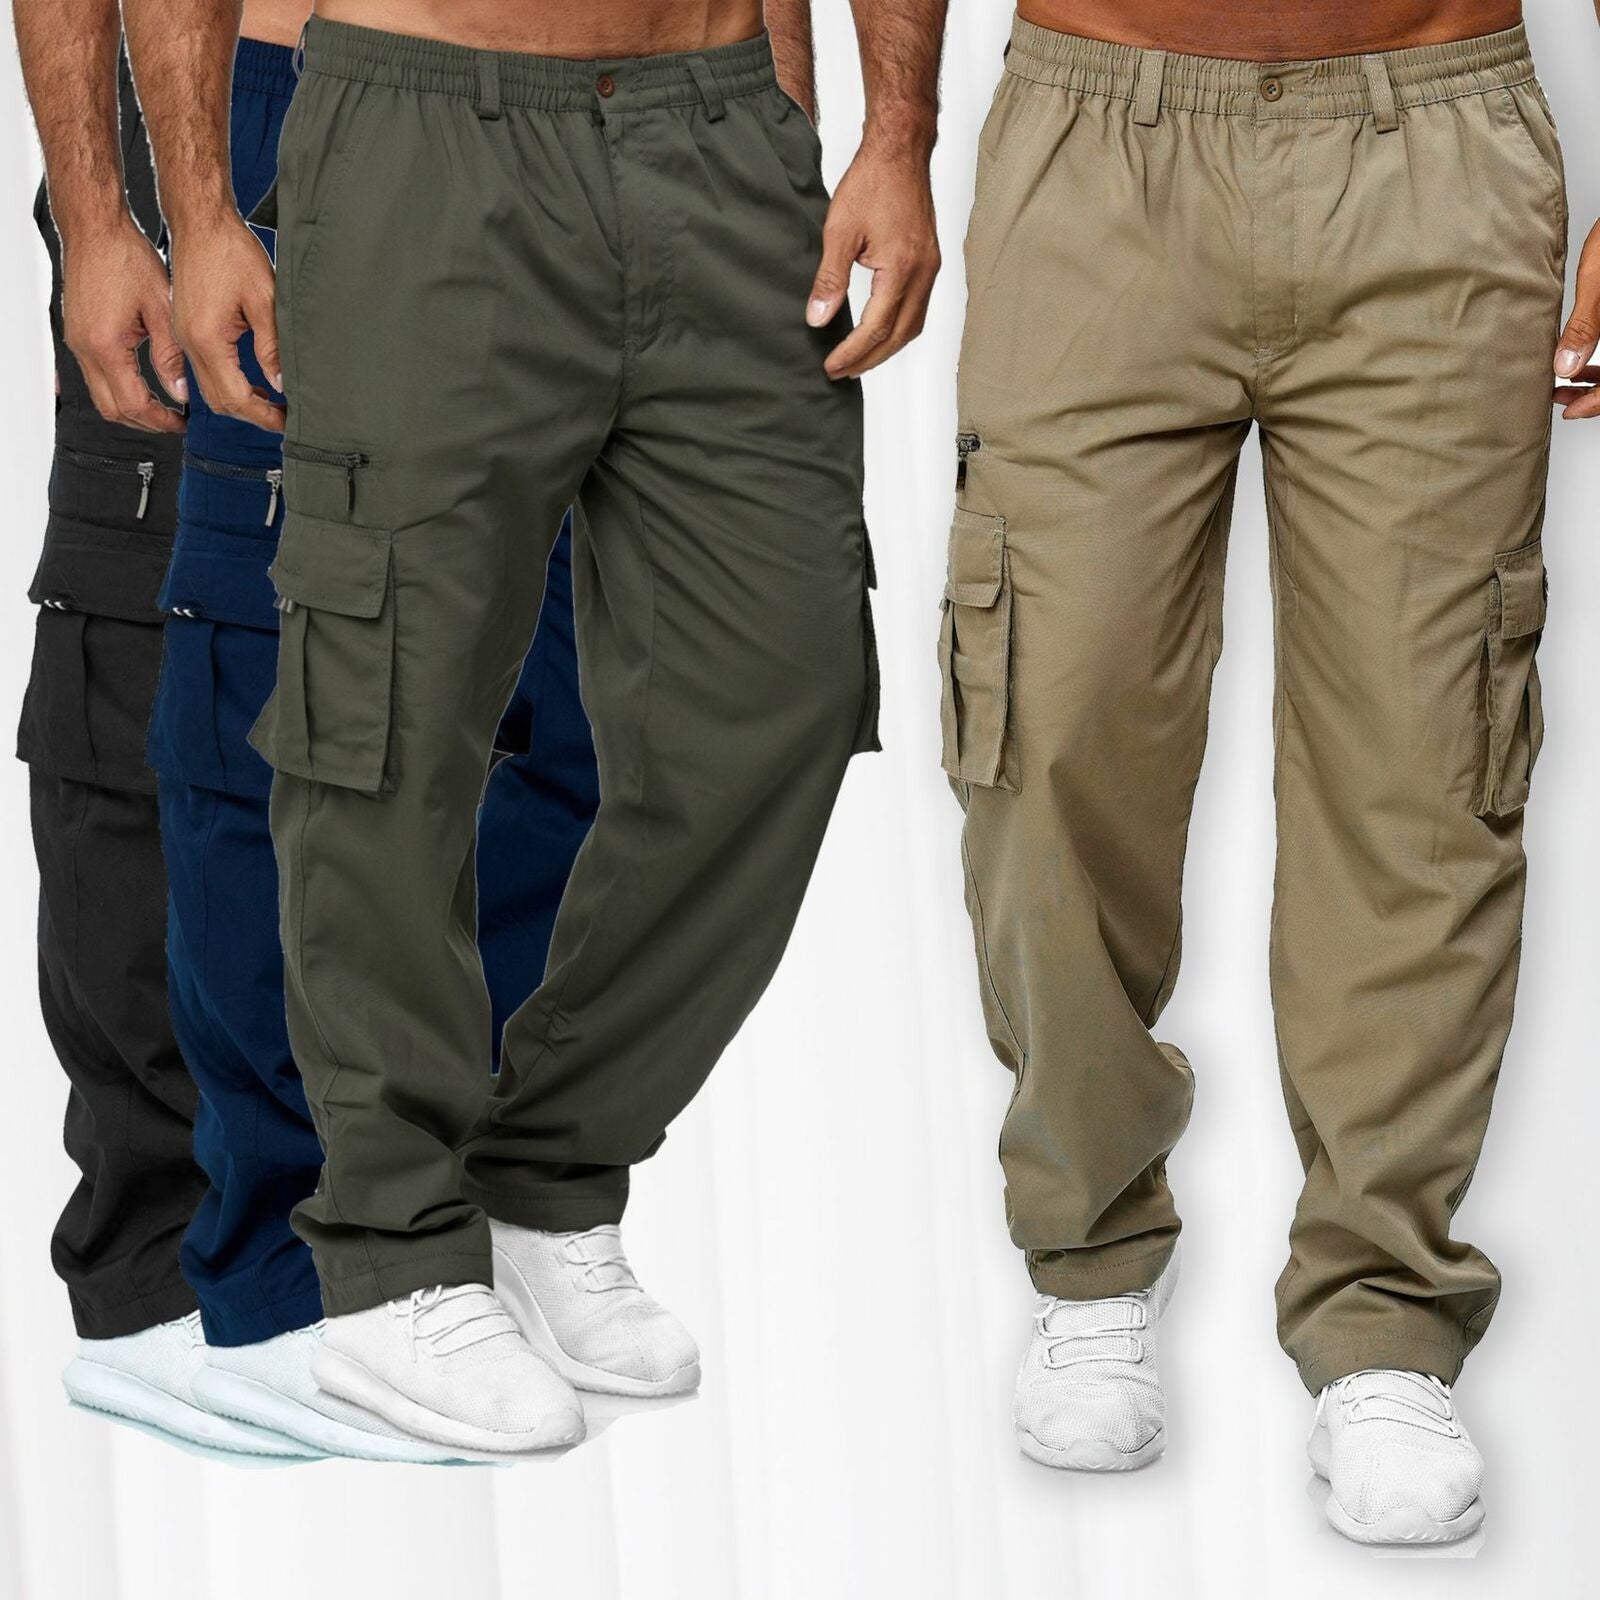 Casual Pockets Men's Outdoor Pants-Pants-Khaki-S-Free Shipping Leatheretro